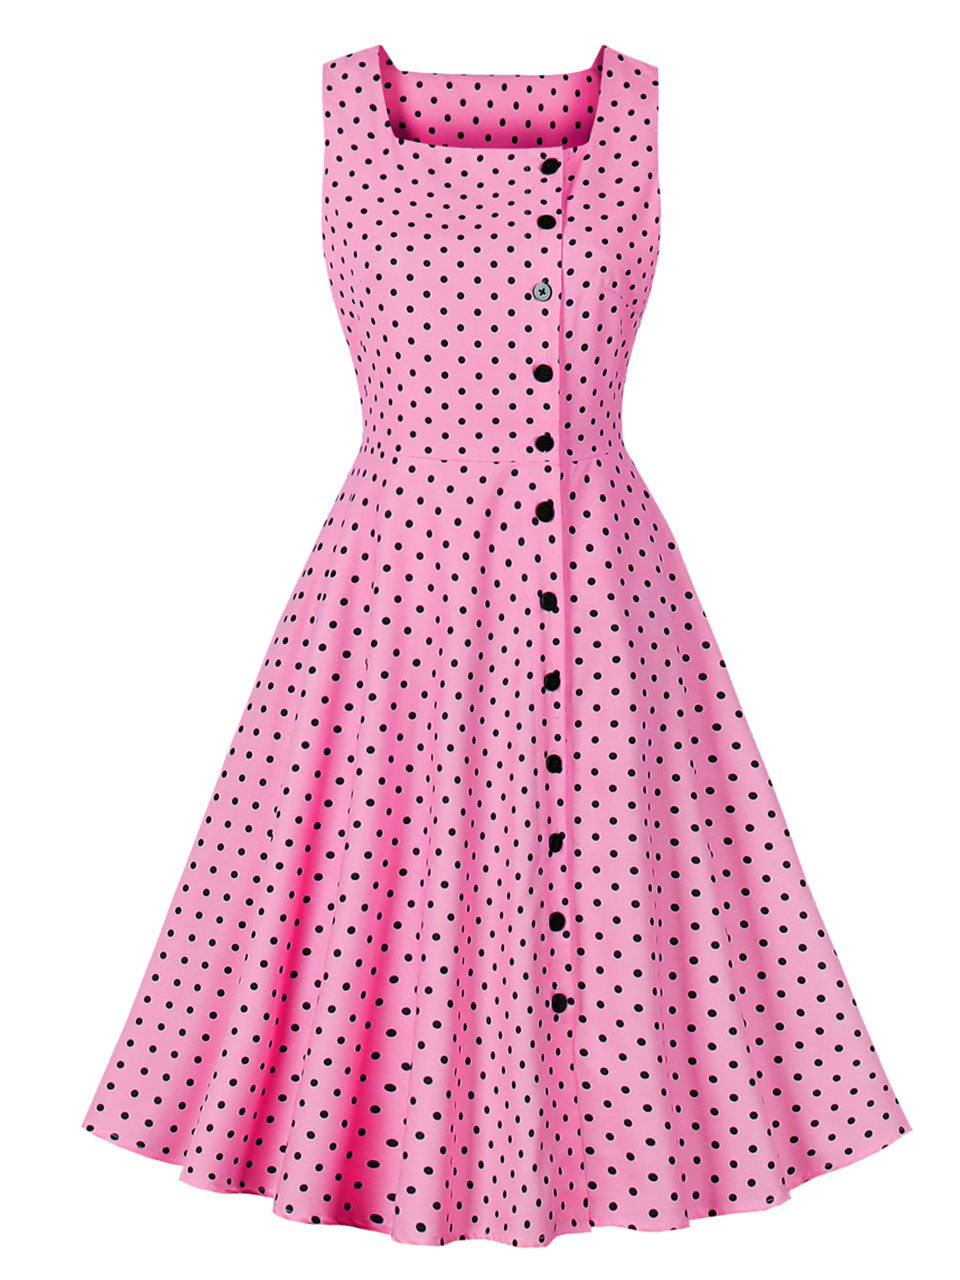 1950S Polka Dots Vintage Swing Dress